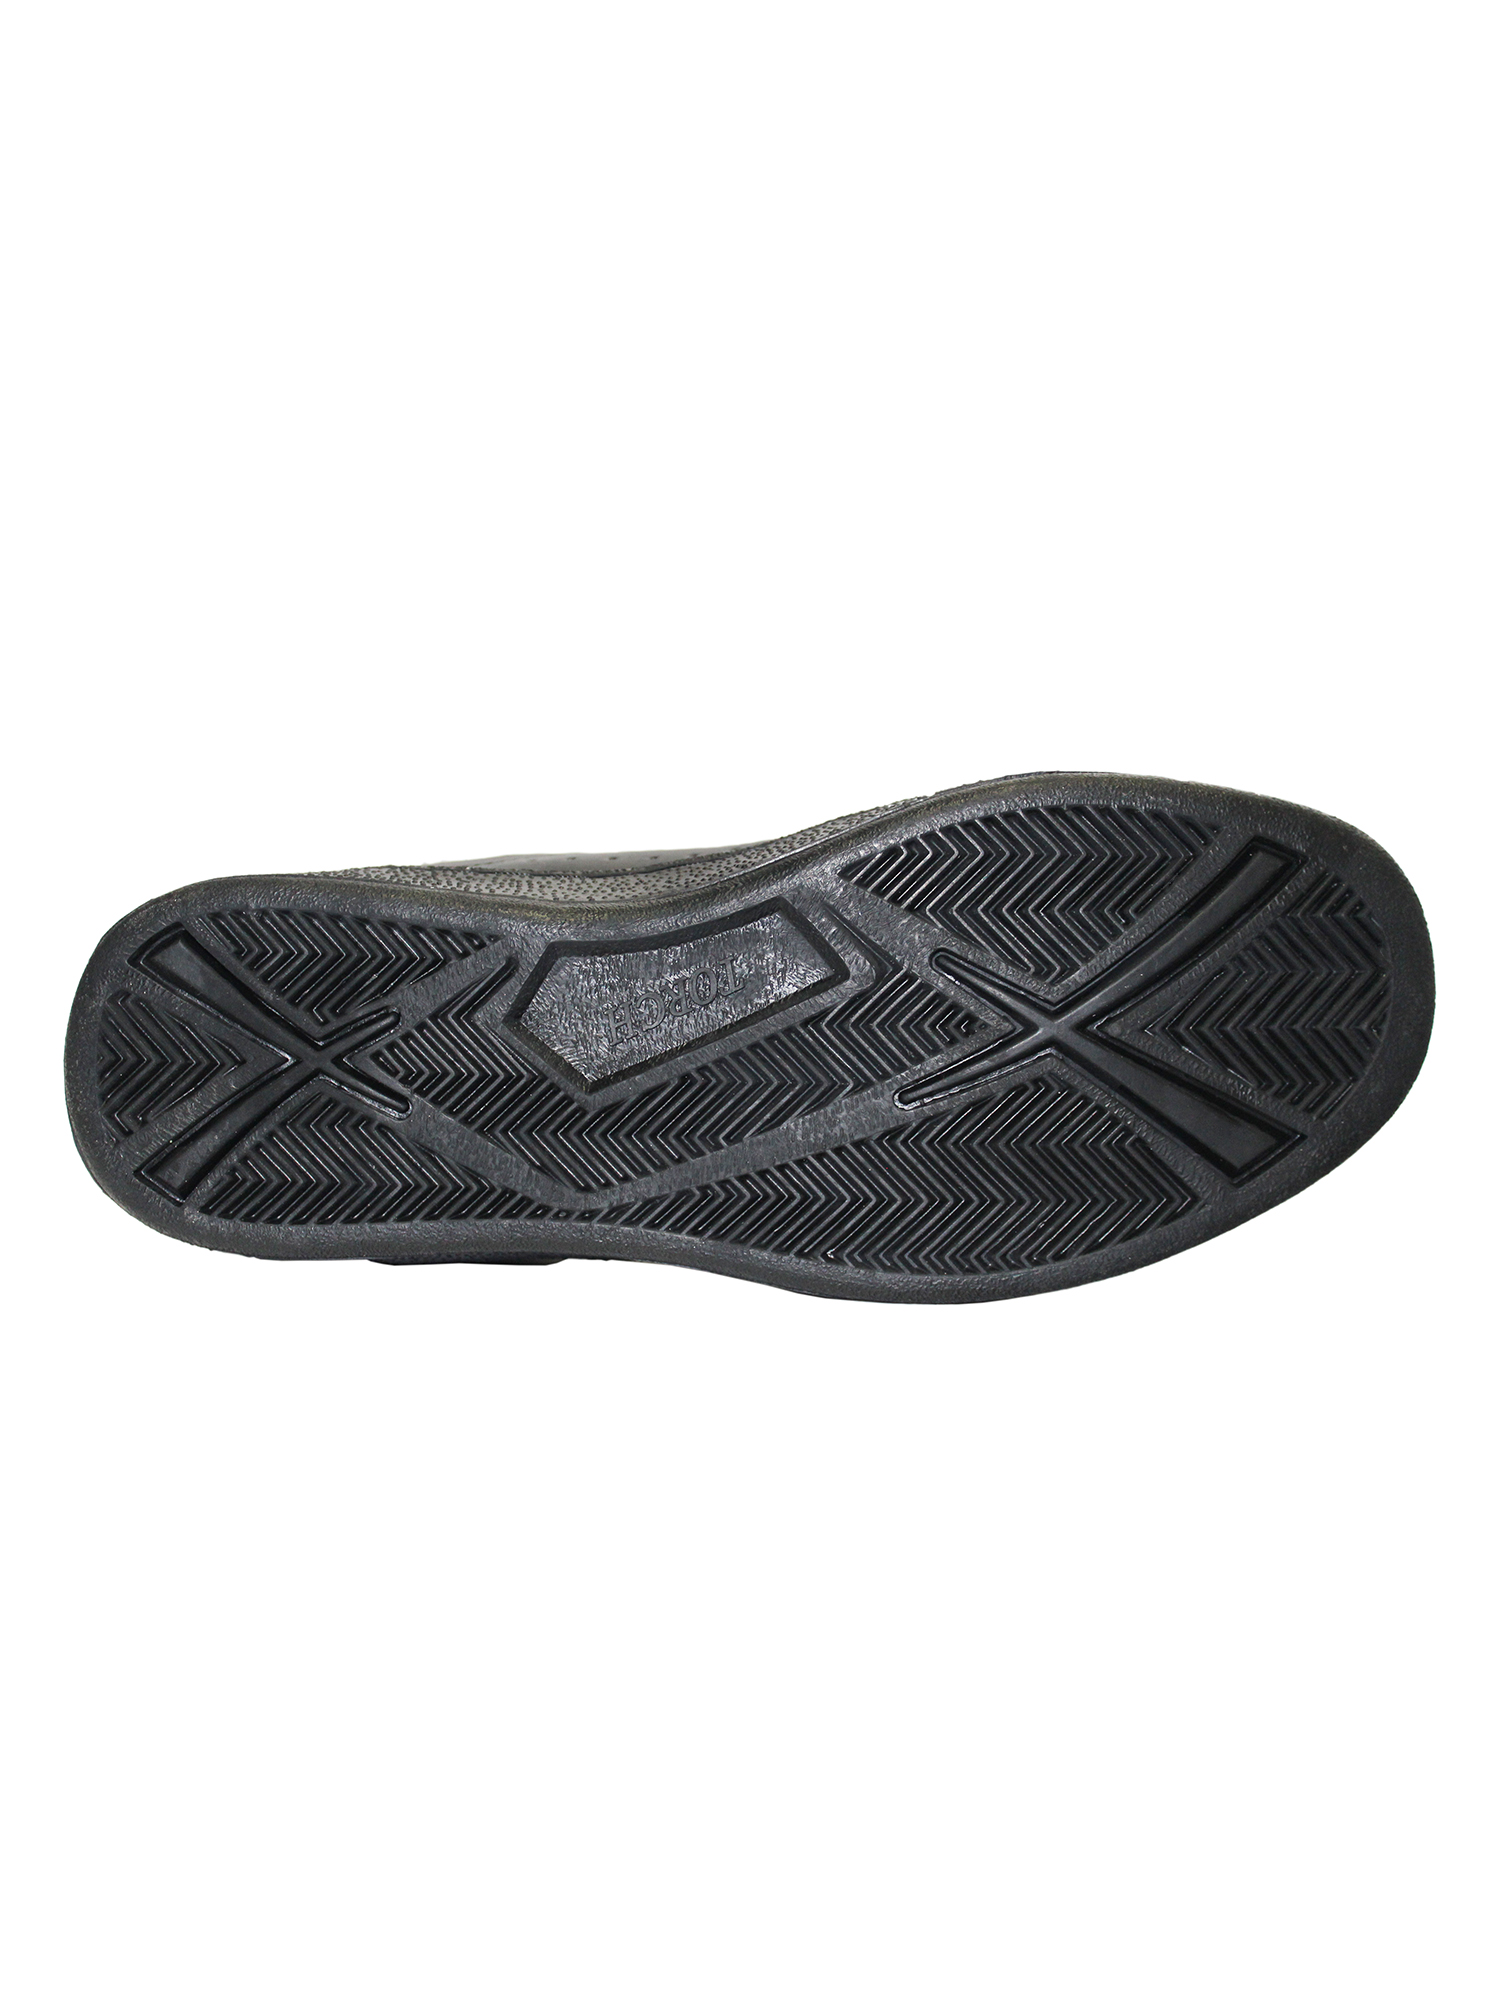 Tanleewa Men's Leather Strap Sneakers Lightweight Hook and Loop Walking Shoe Size 8.5 Adult Male - image 3 of 4